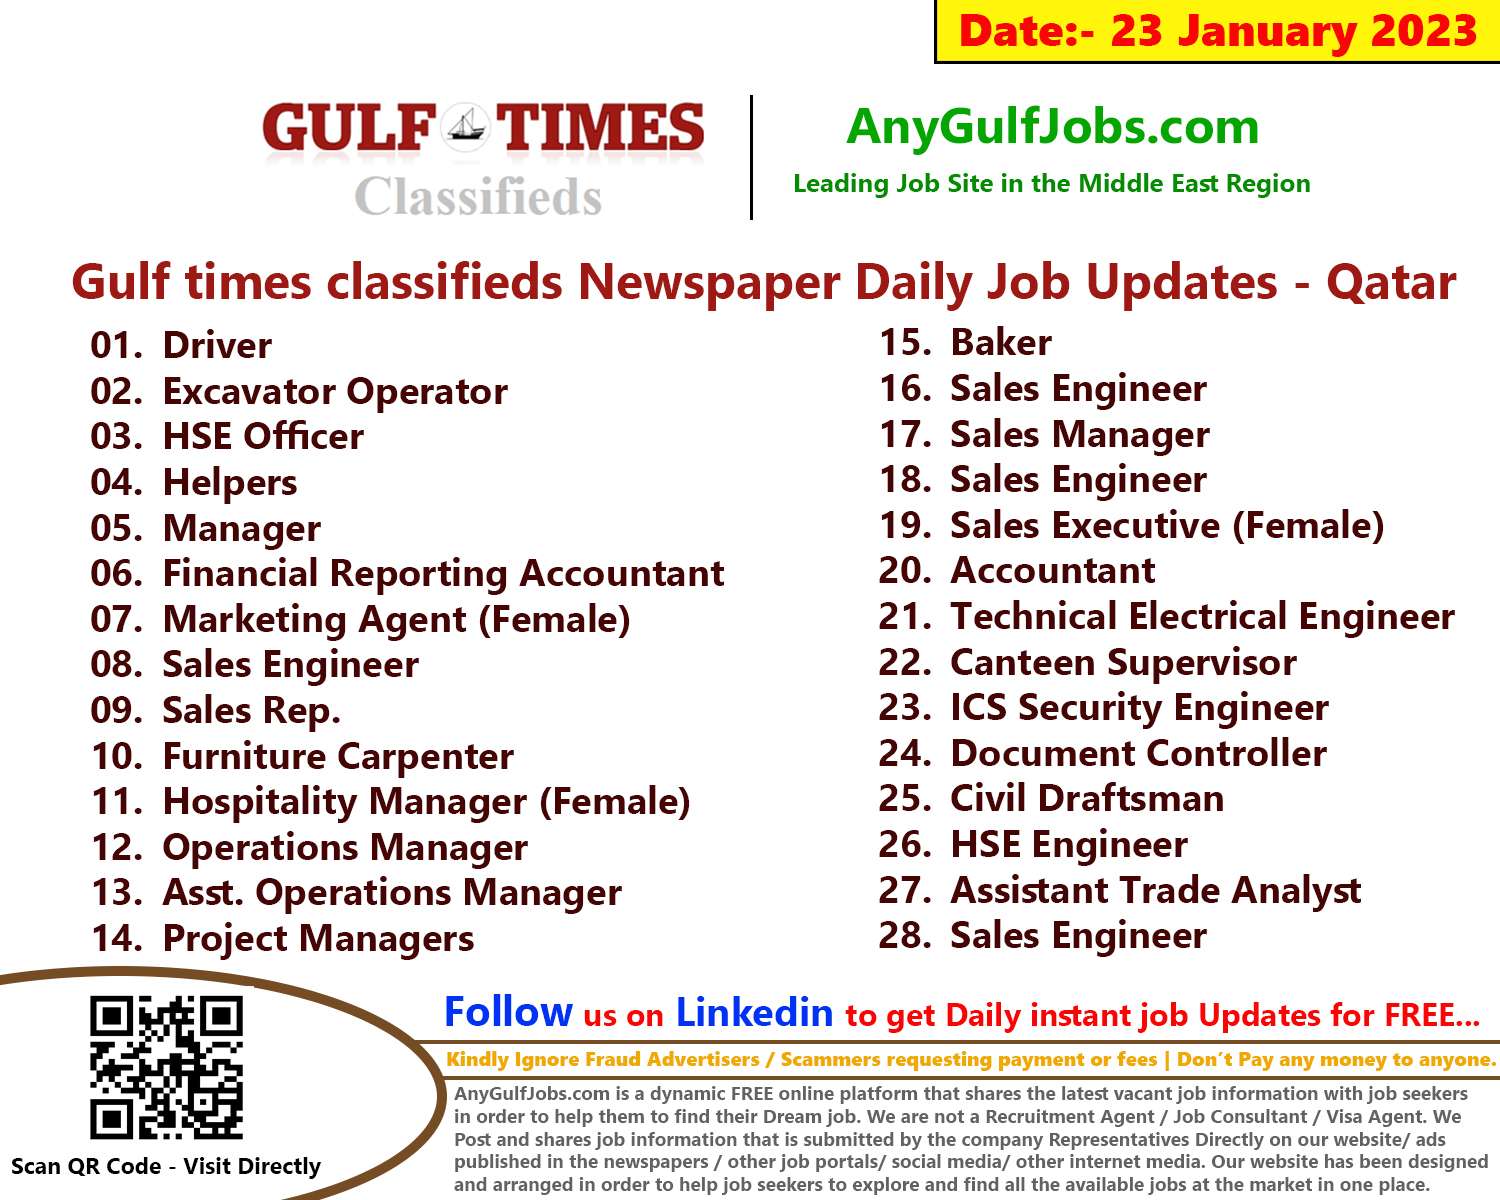 Gulf times classifieds Job Vacancies Qatar - 23 January 2023